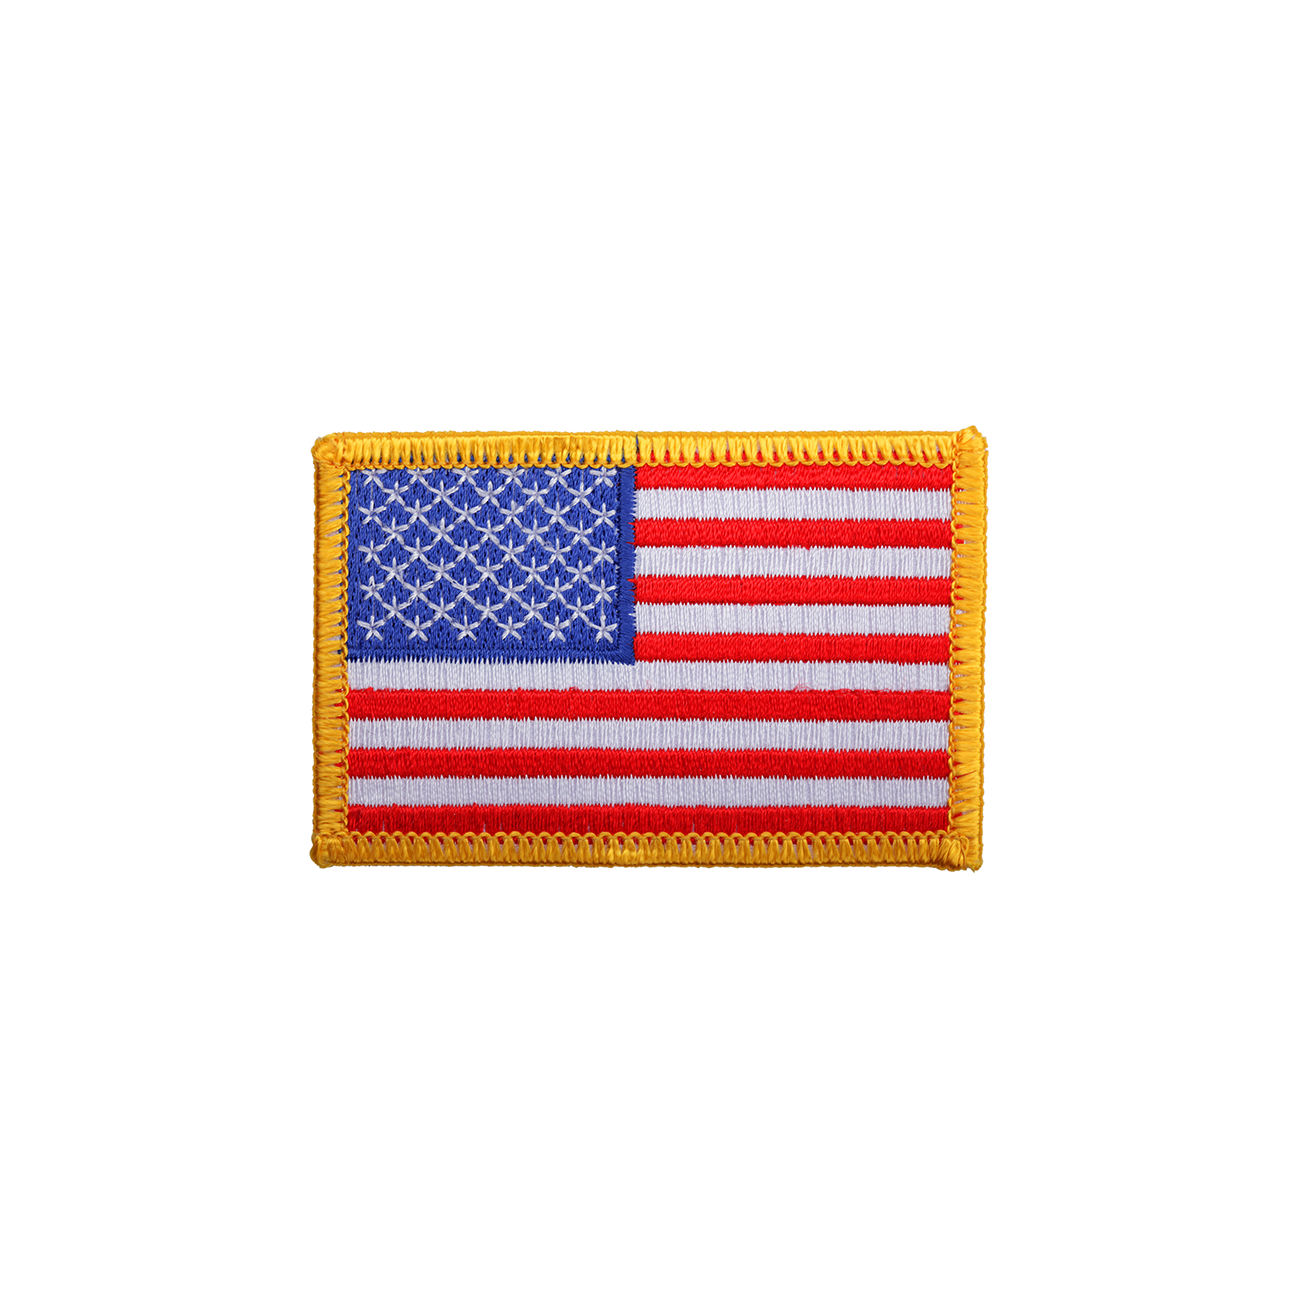 AUFNÄHER Patch FLAGGEN flagge ALASKA USA STAATEN flag Fahne 7x4.5cm